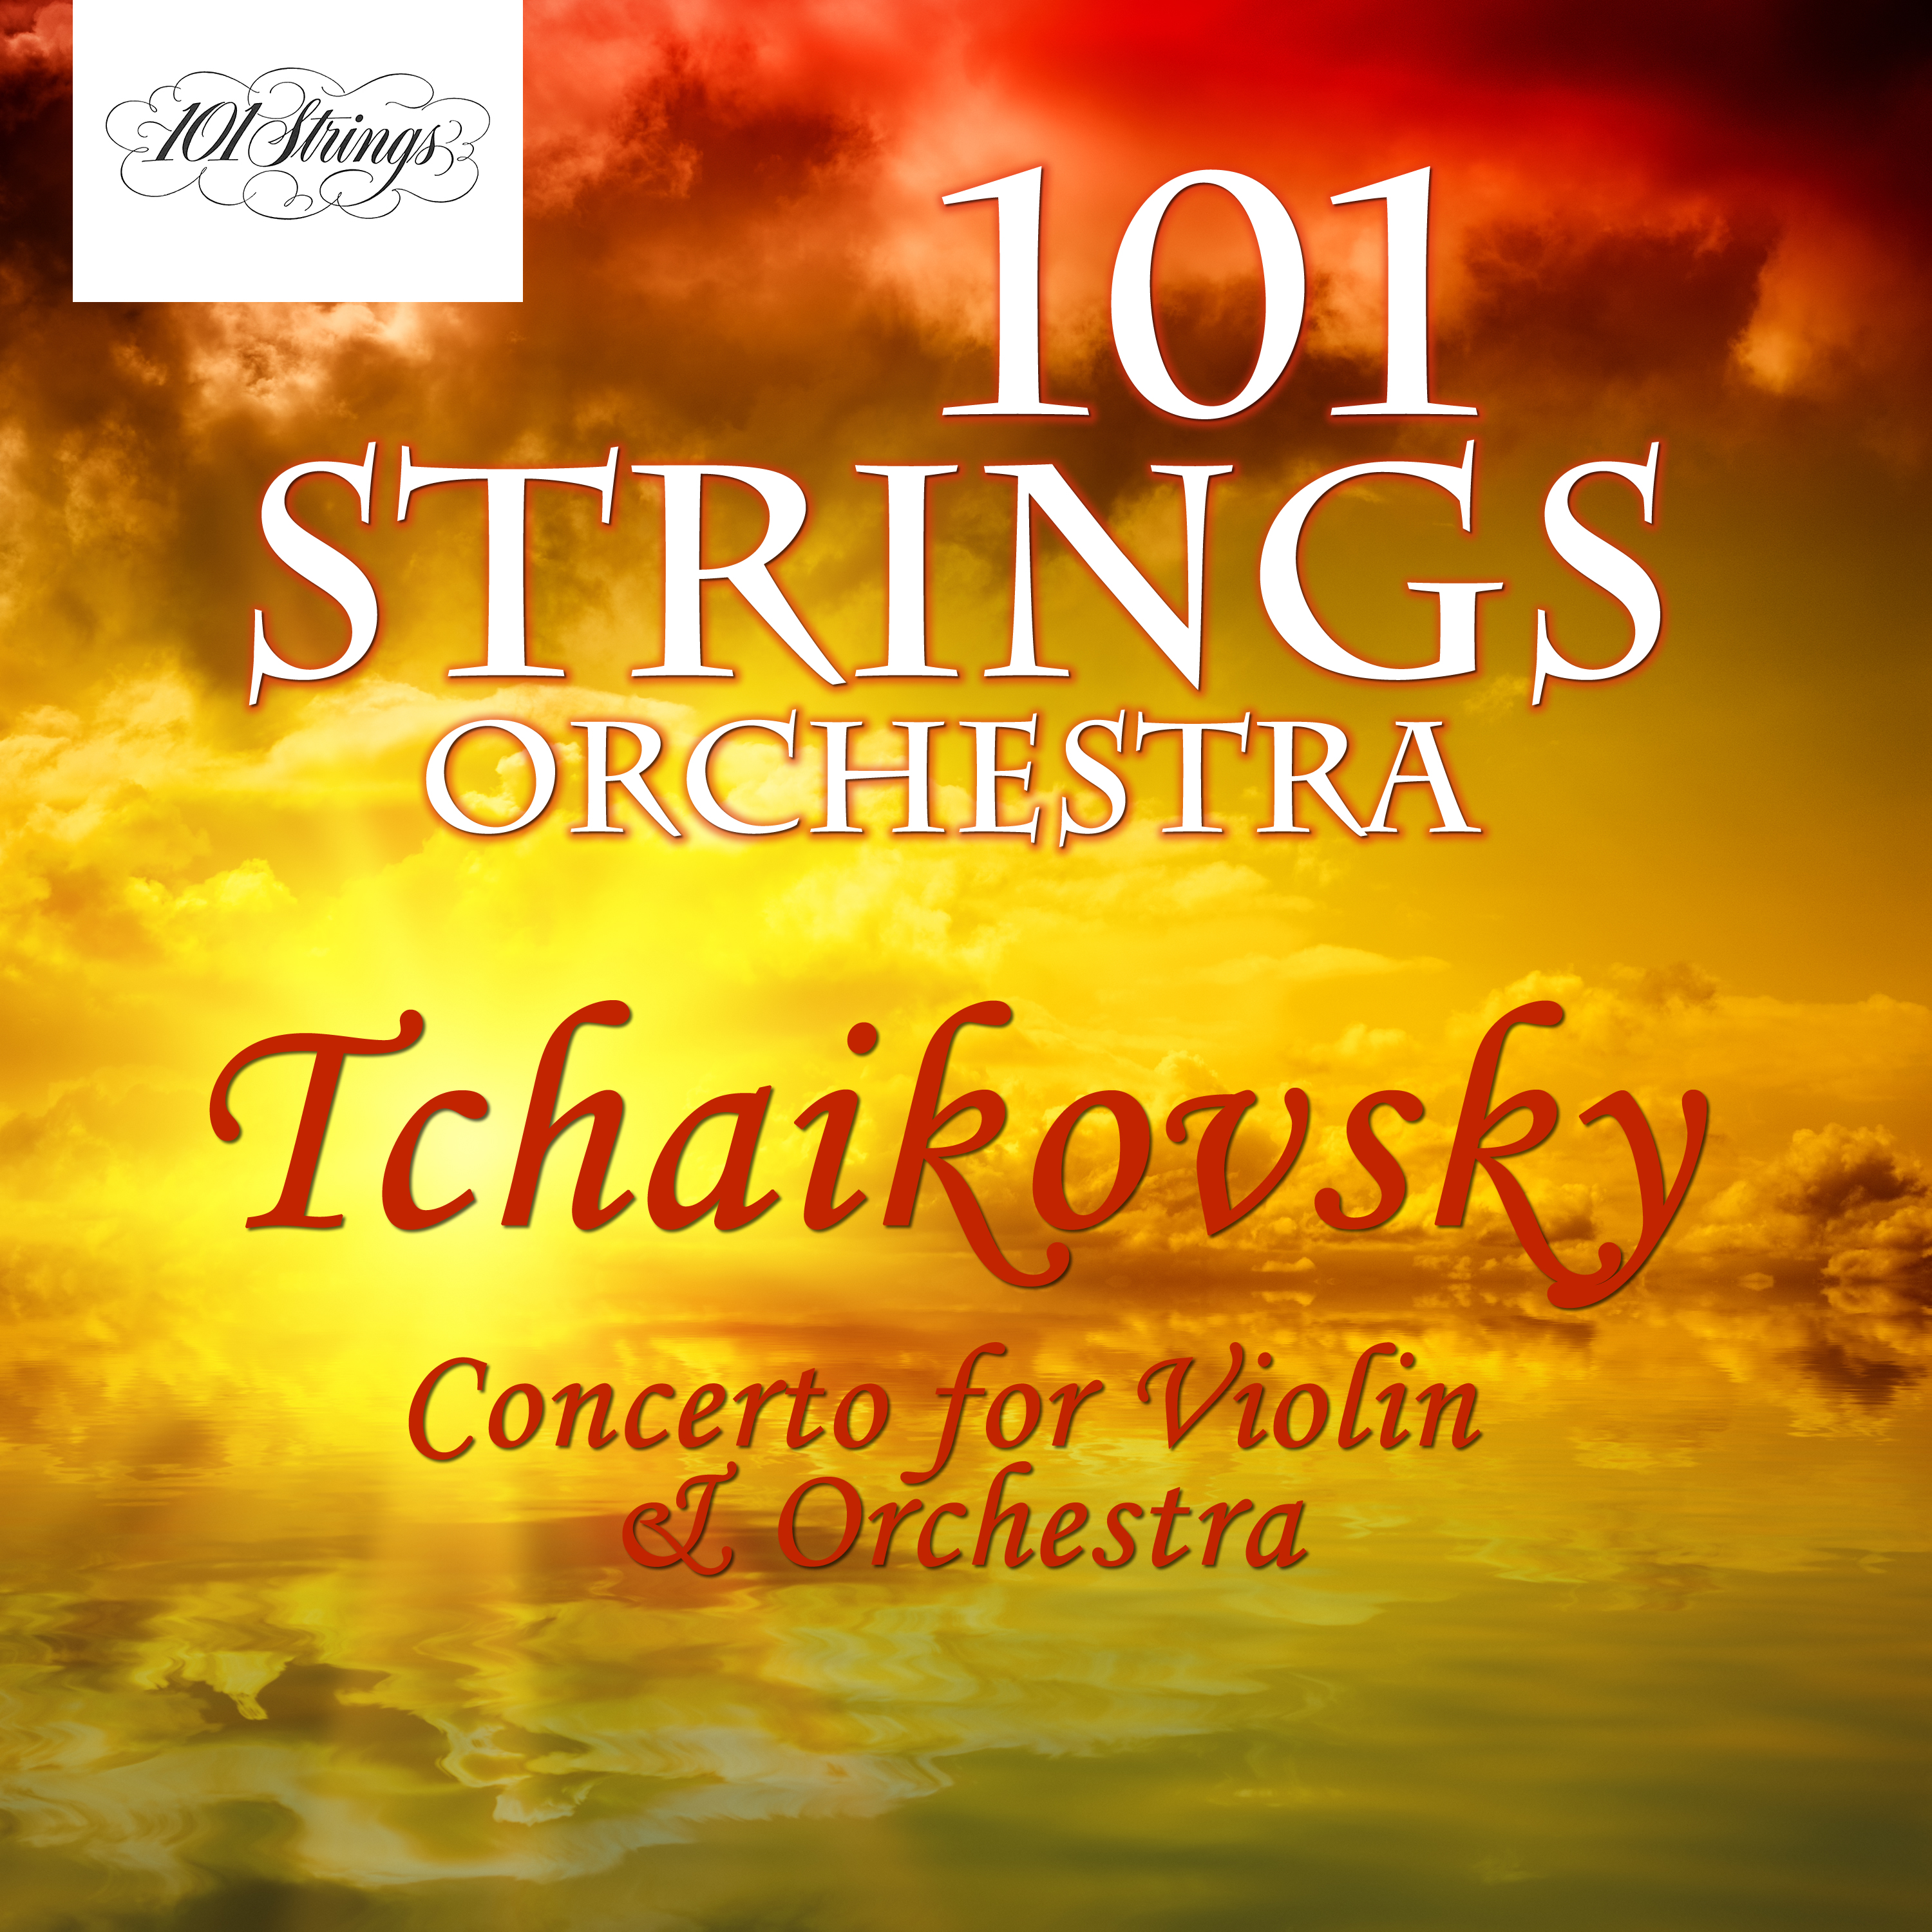 Pyotr Ilyich Tchaikovsky: Concerto for Violin & Orchestra in D Major, Op. 35: Allegro Vivacissimo